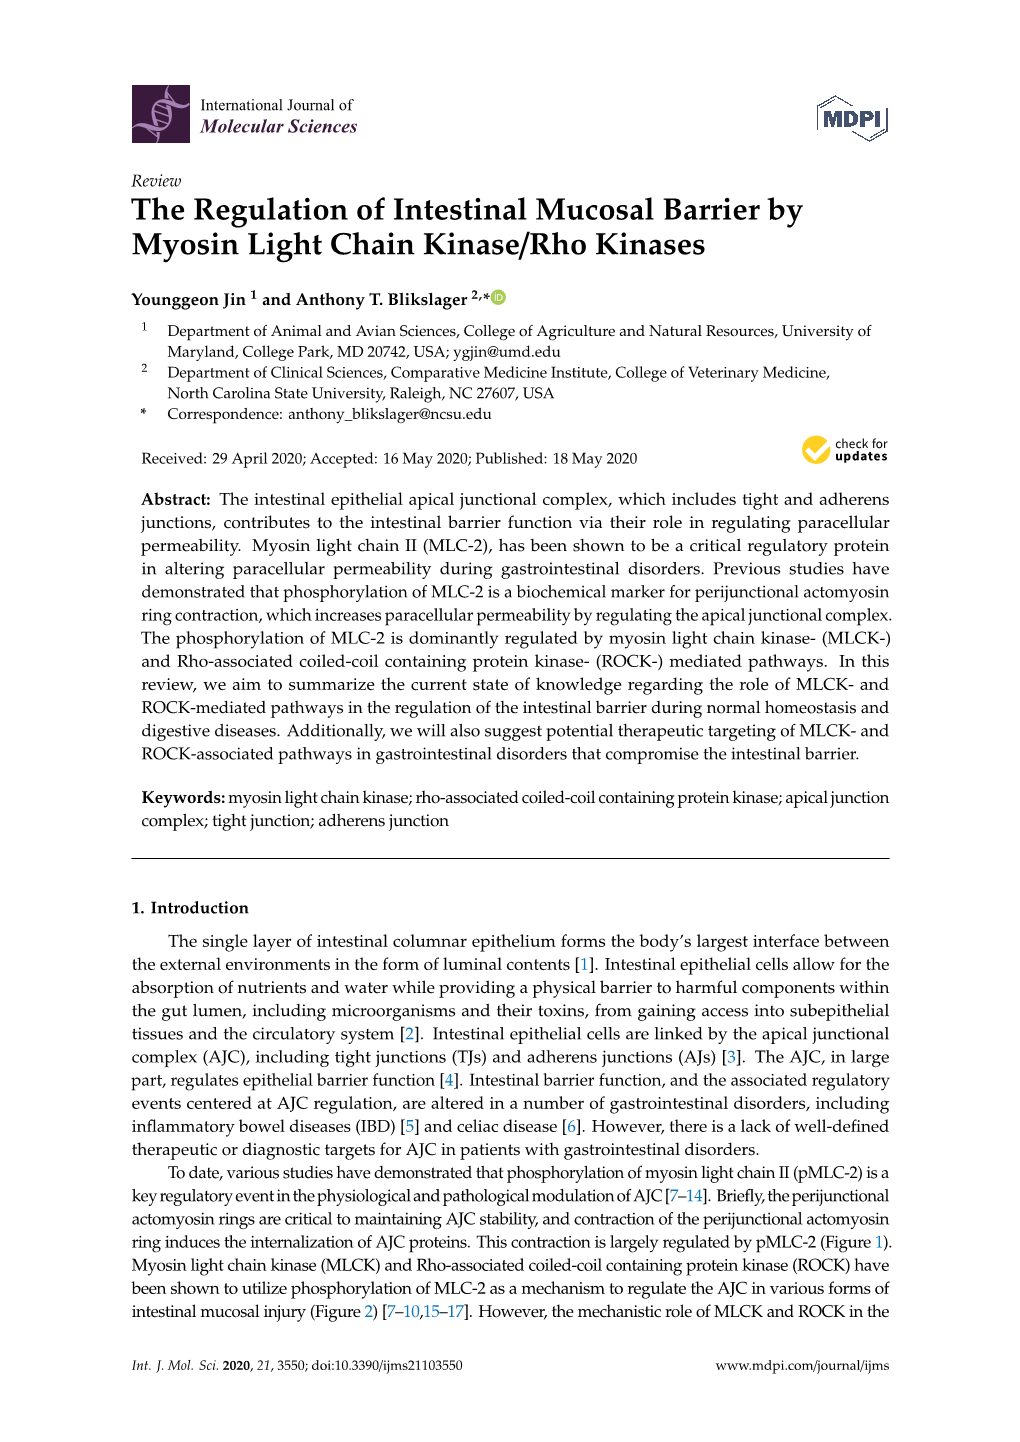 The Regulation of Intestinal Mucosal Barrier by Myosin Light Chain Kinase/Rho Kinases